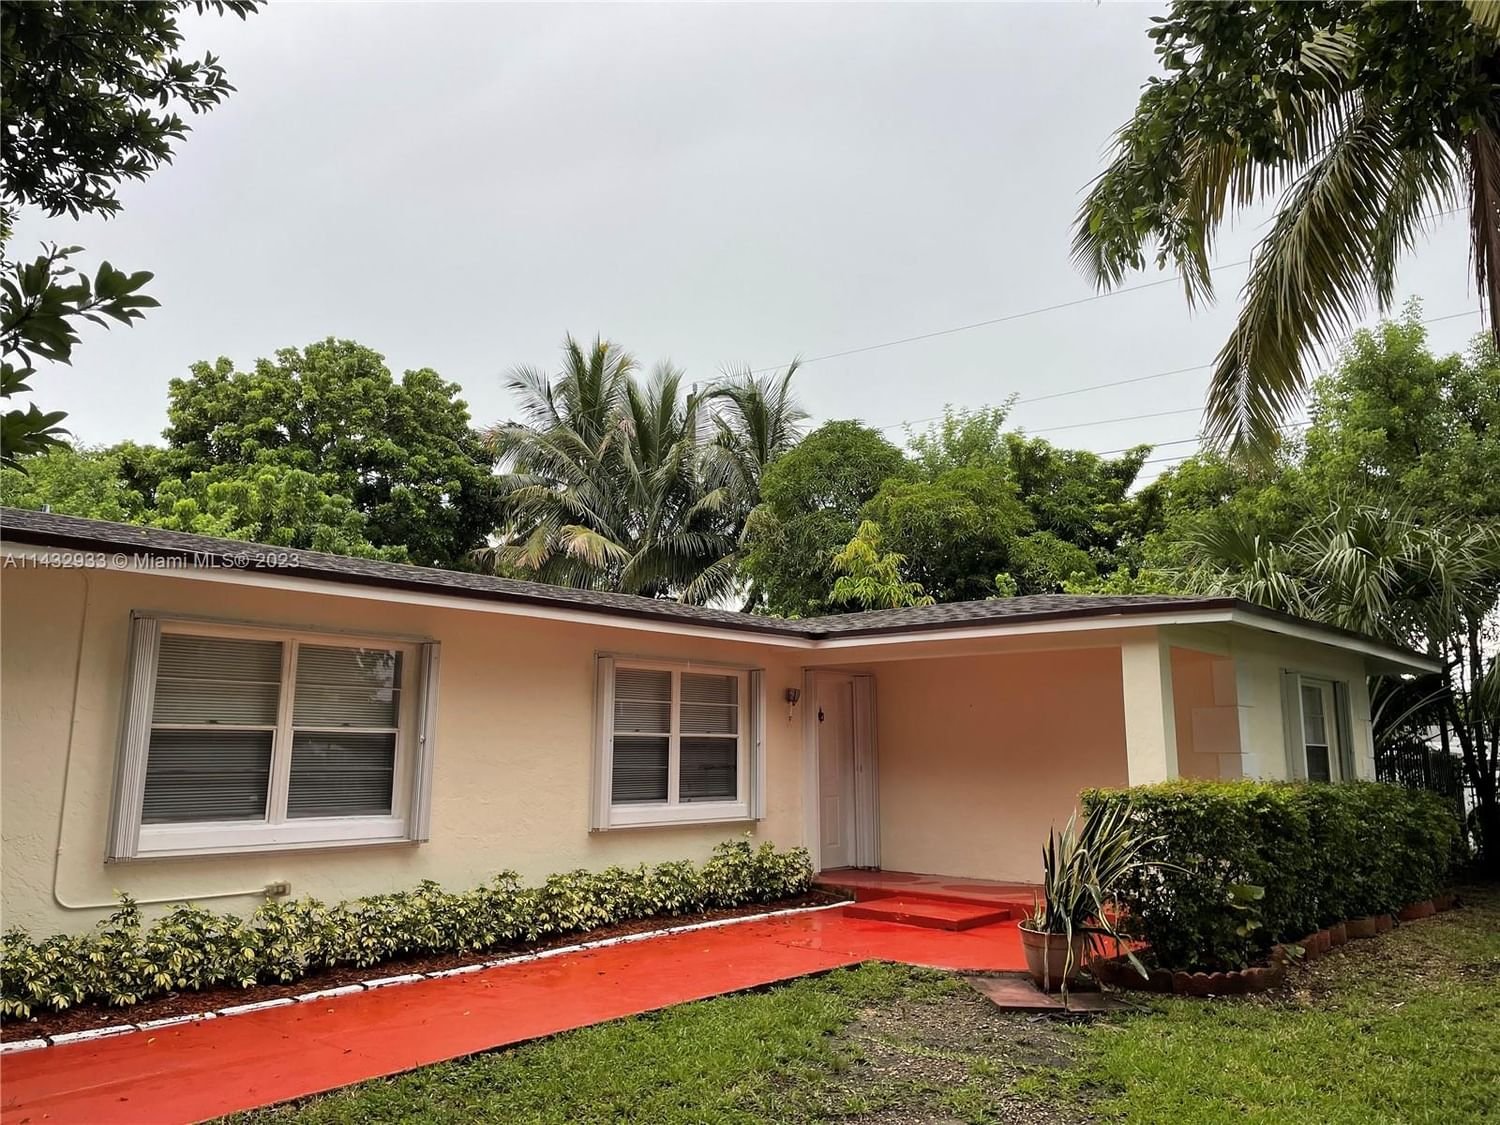 Real estate property located at 7125 135th Ct, Miami-Dade County, Miami, FL